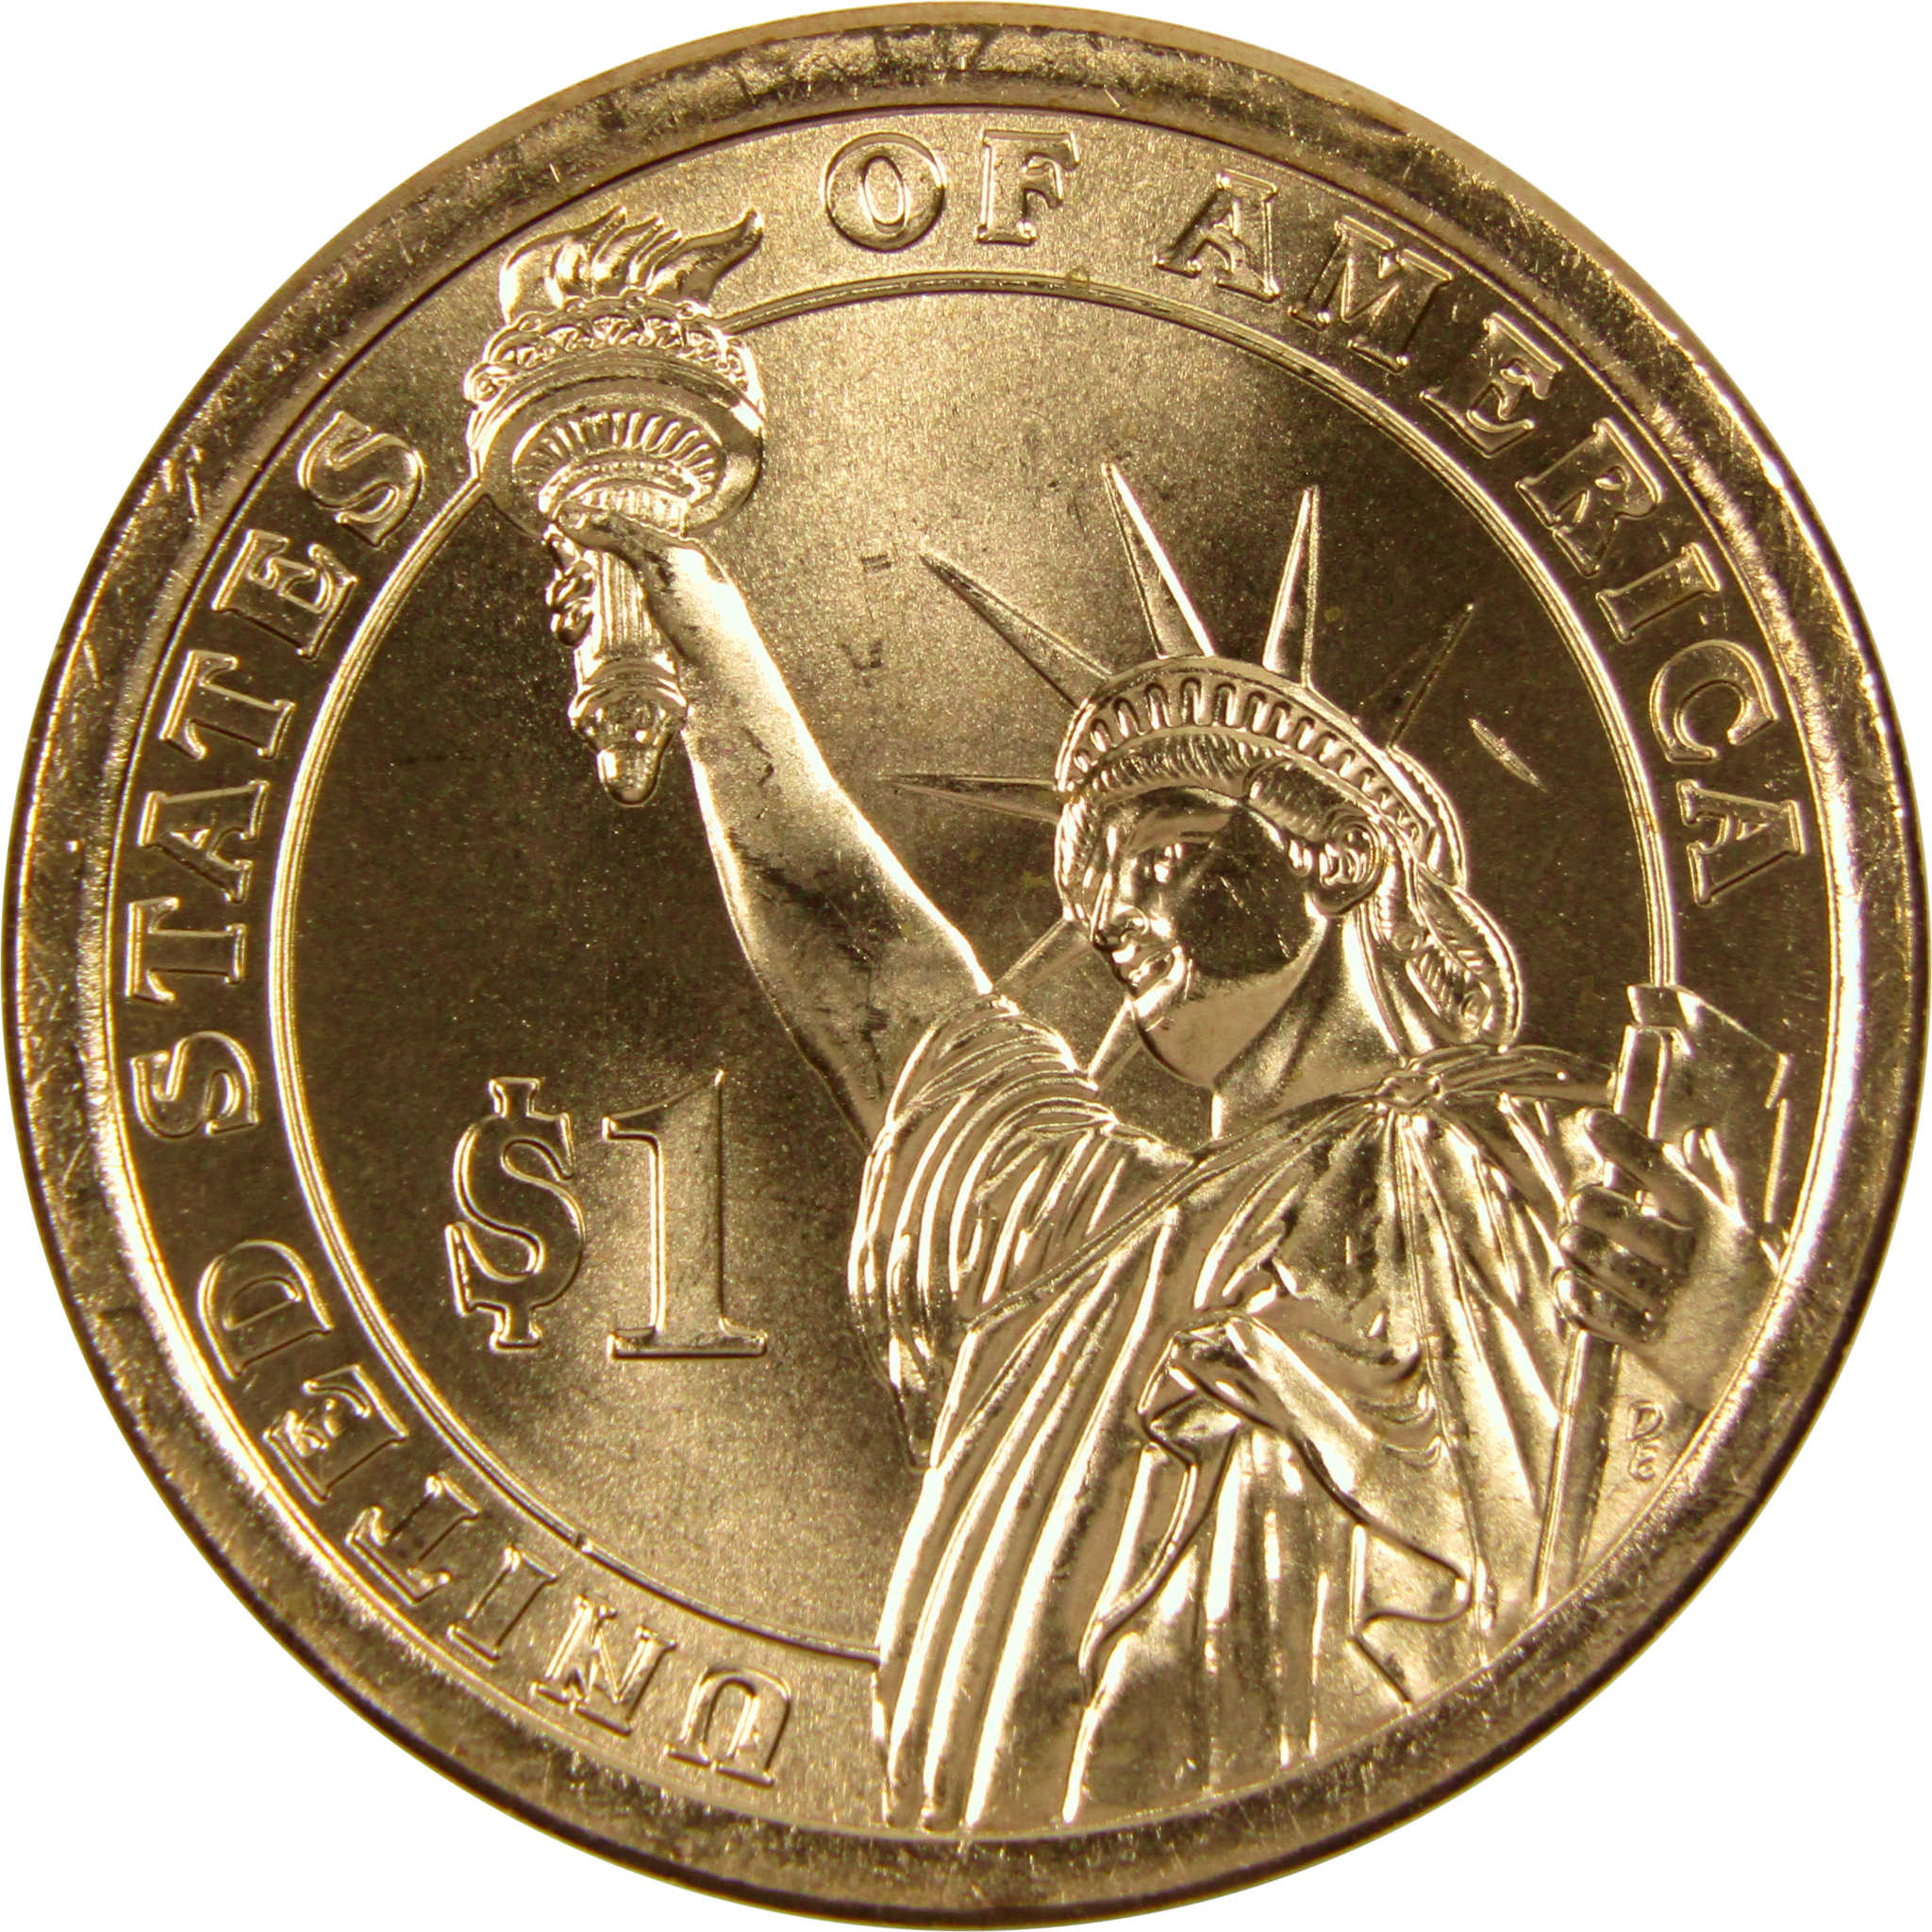 2014 D Calvin Coolidge Presidential Dollar BU Uncirculated $1 Coin